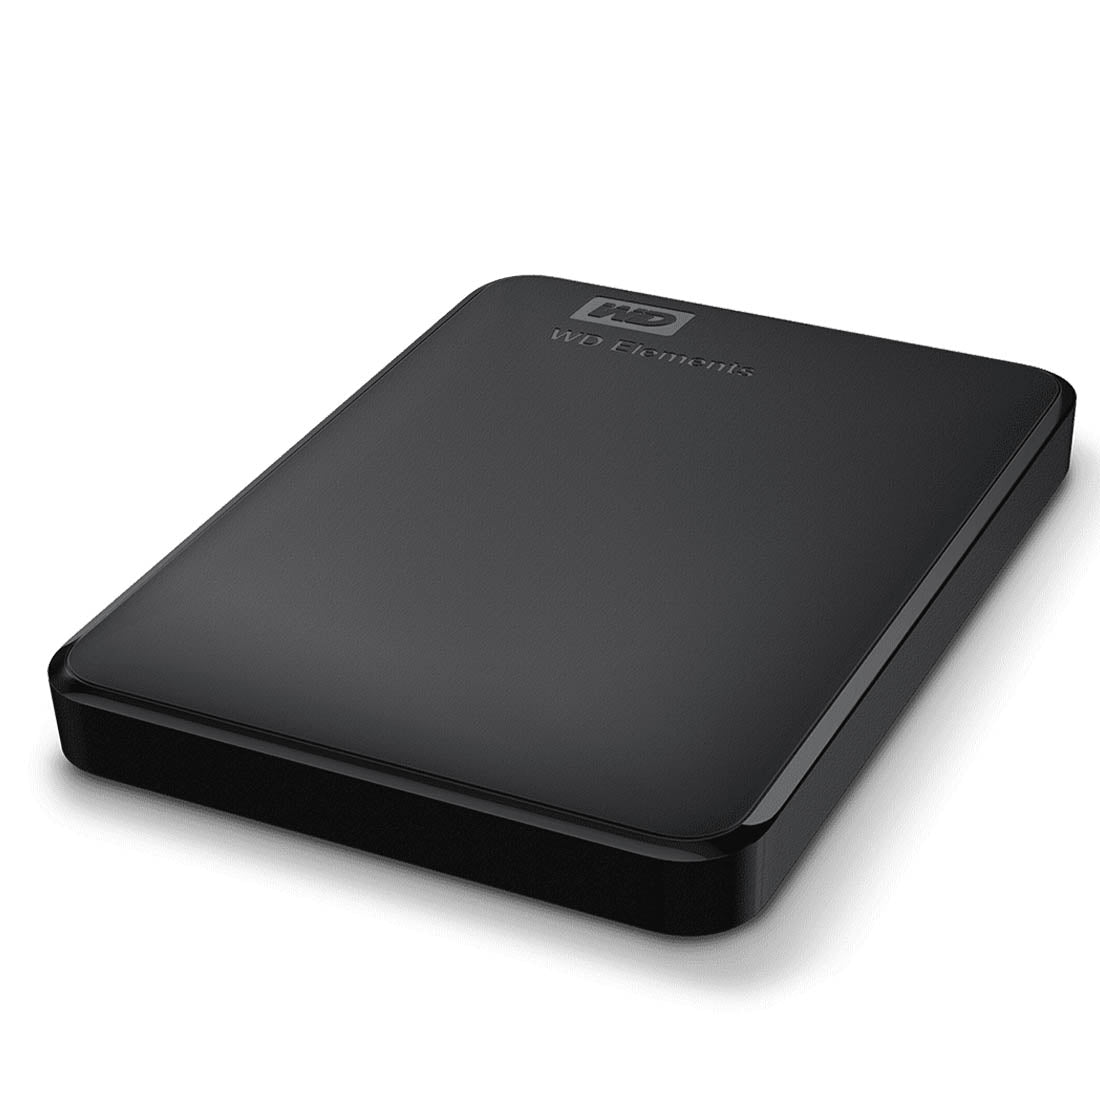 Western Digital Elements 1TB USB 3.0 पोर्टेबल बाहरी हार्ड ड्राइव (काला)